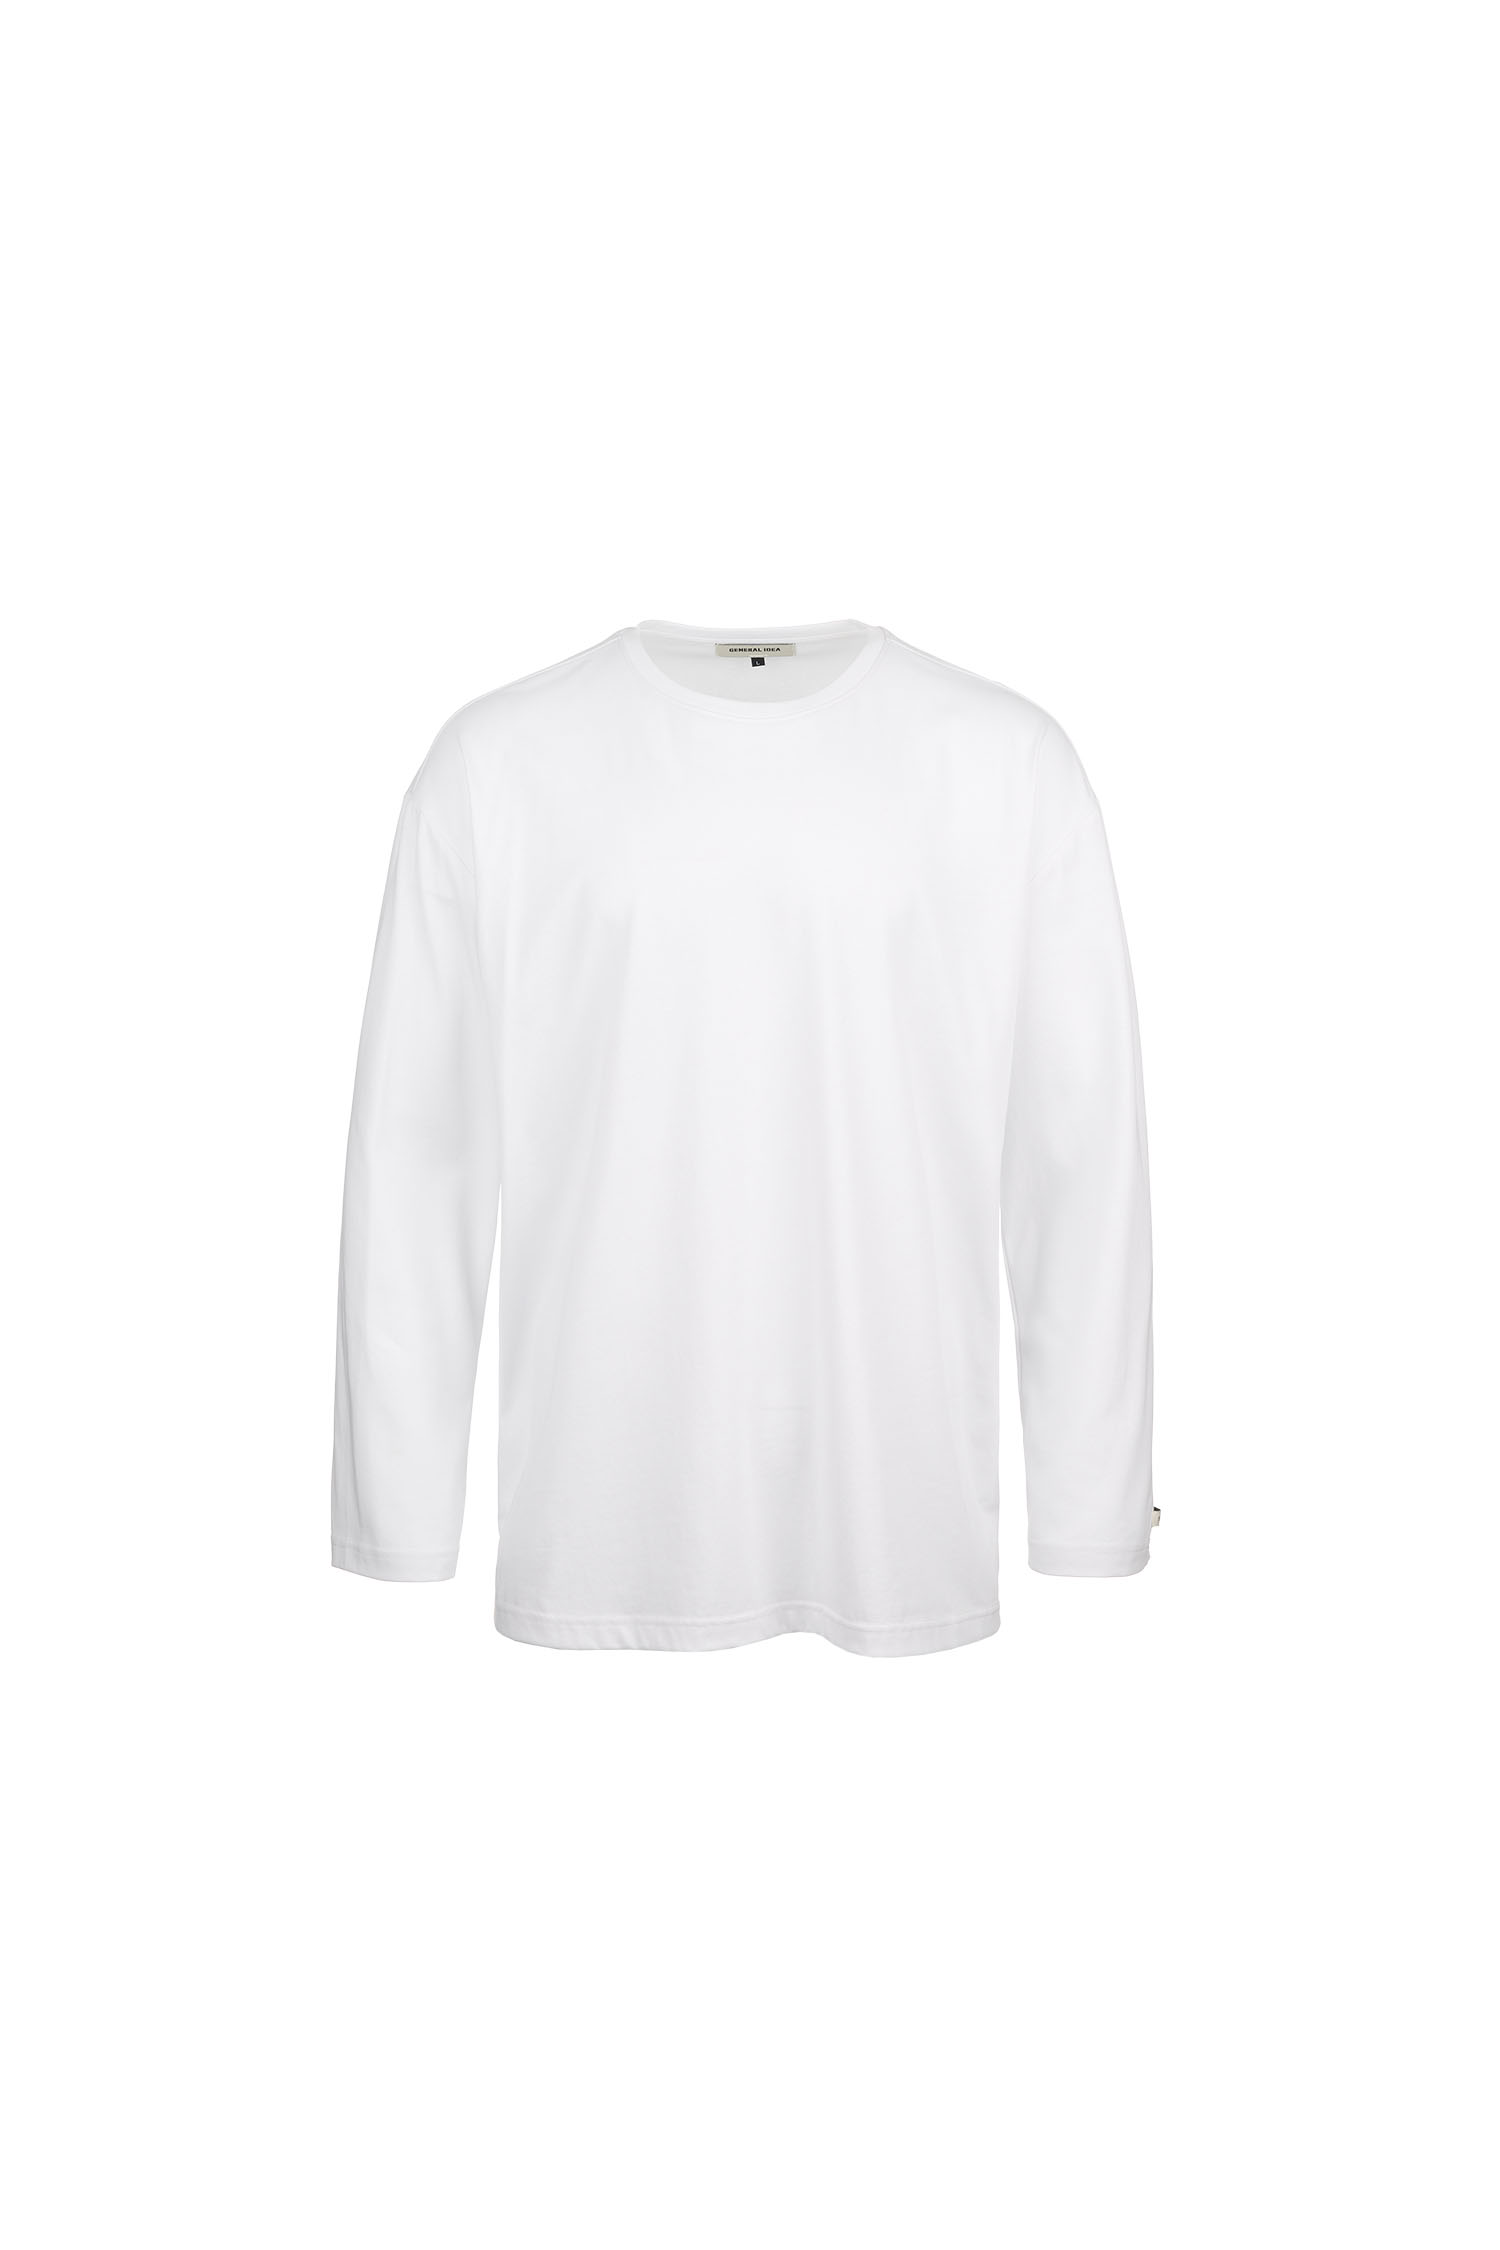 MAN 루즈핏 롱 슬리브 티셔츠 [WHITE]